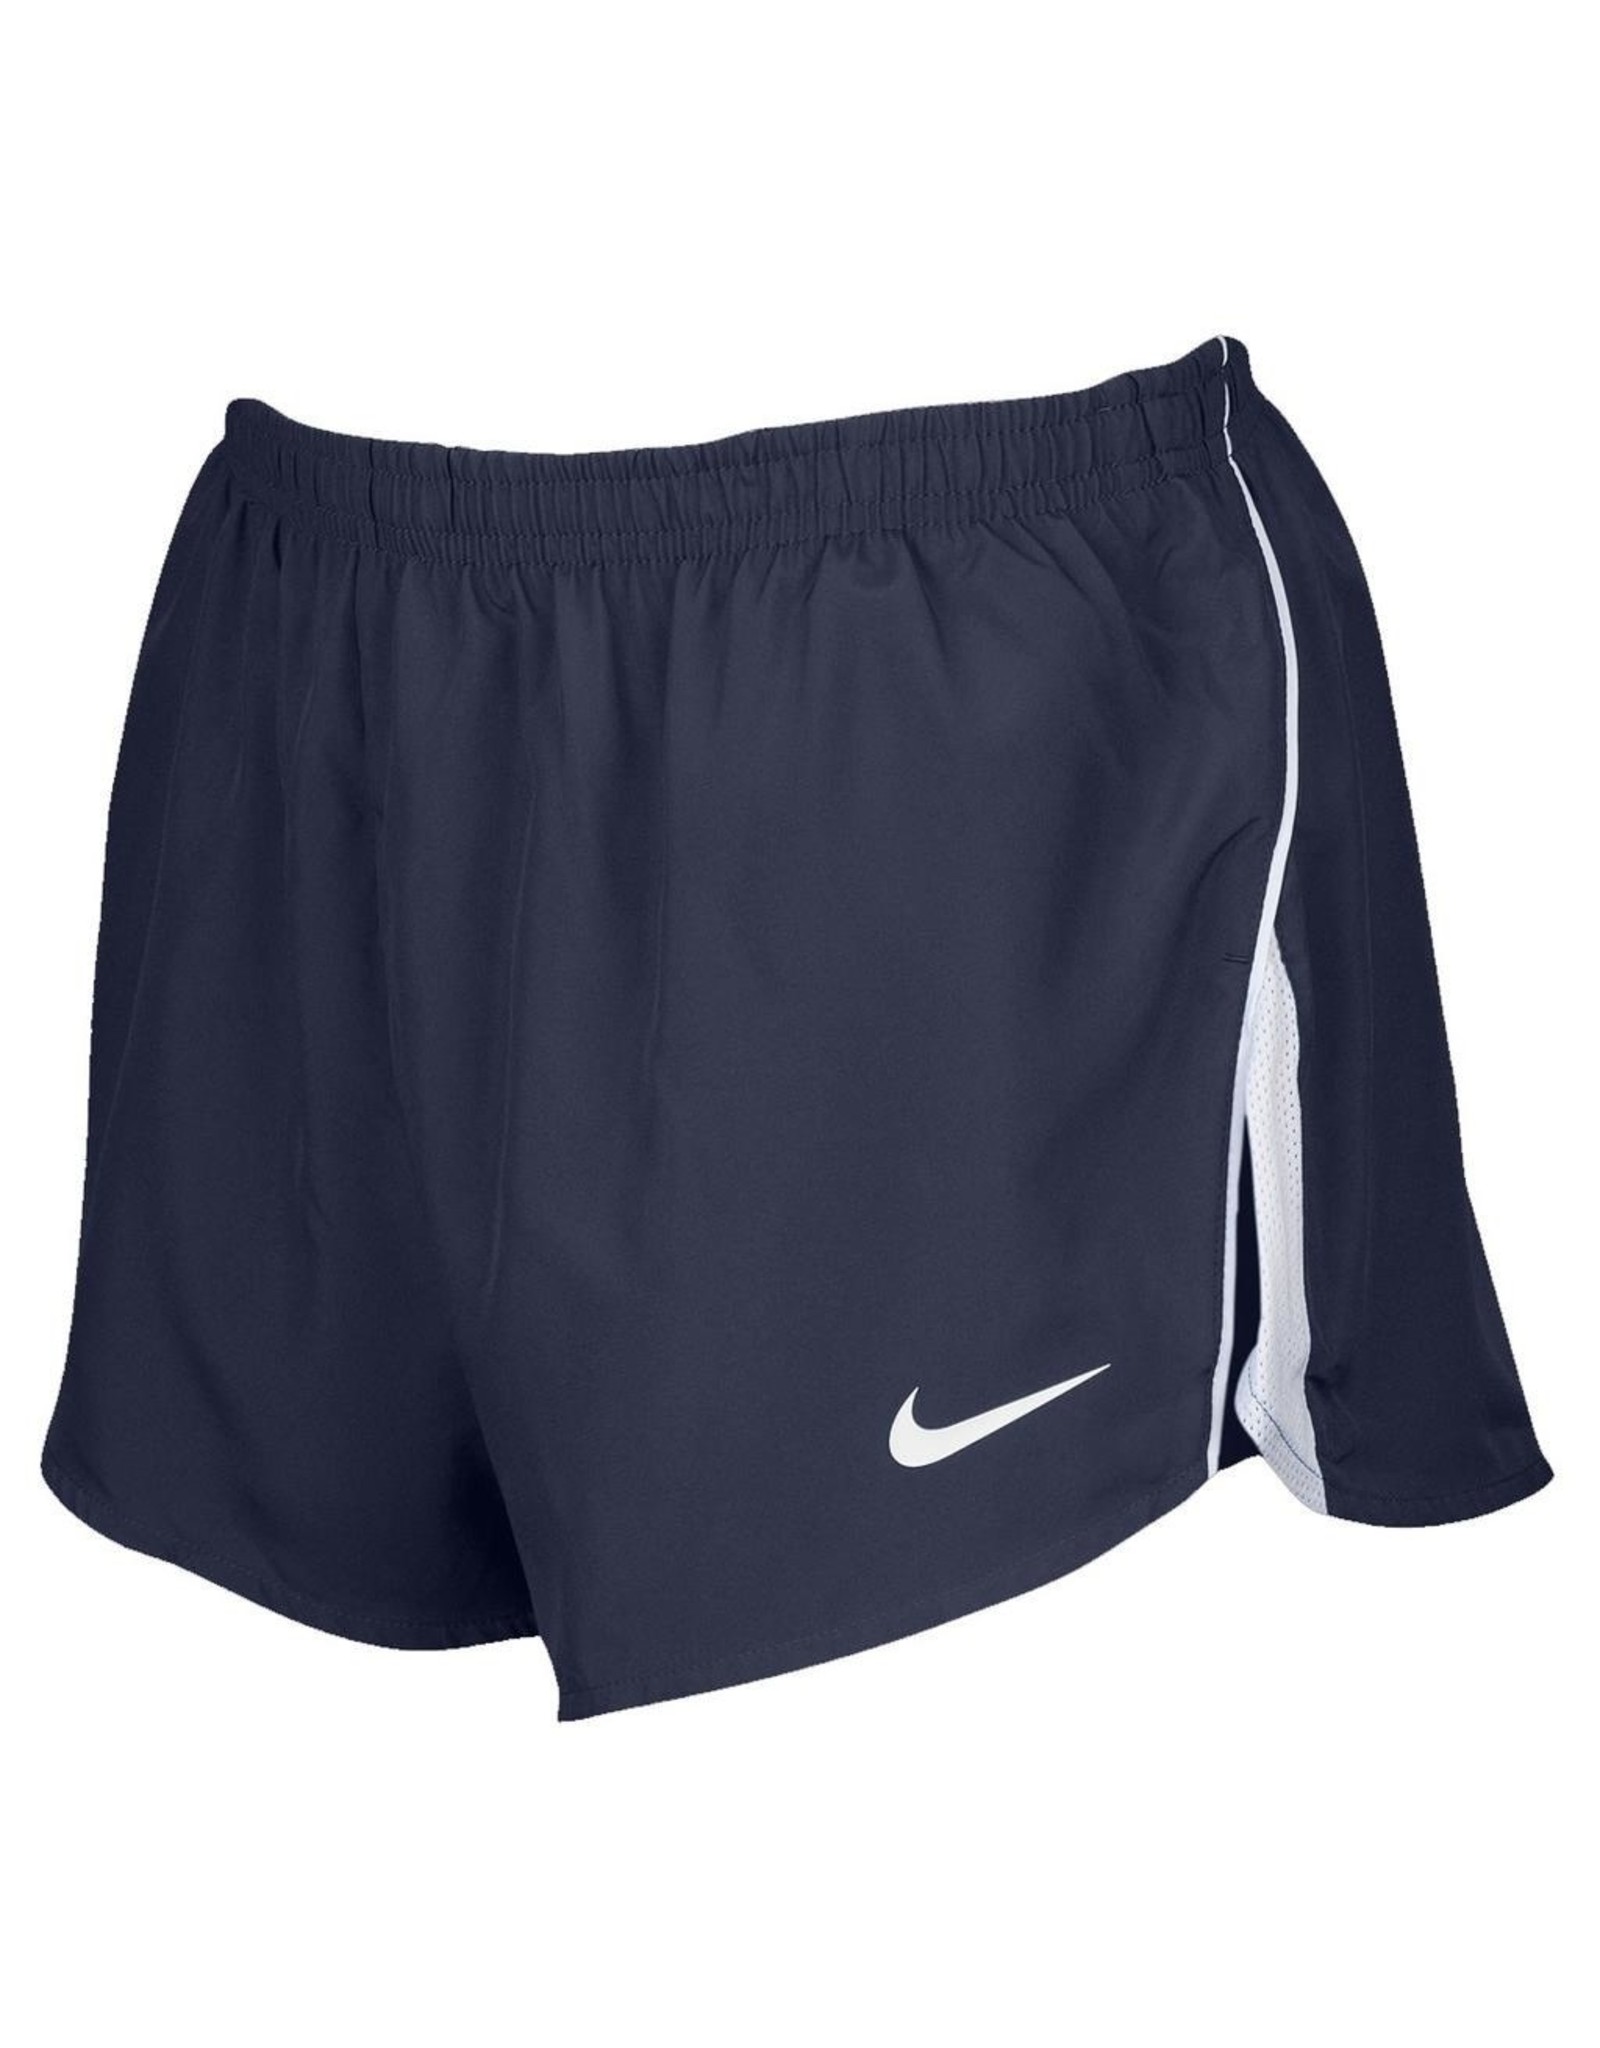 UNIFORM T&F/CC Nike Team Dry Challenger 2" Shorts - Men's/Unisex